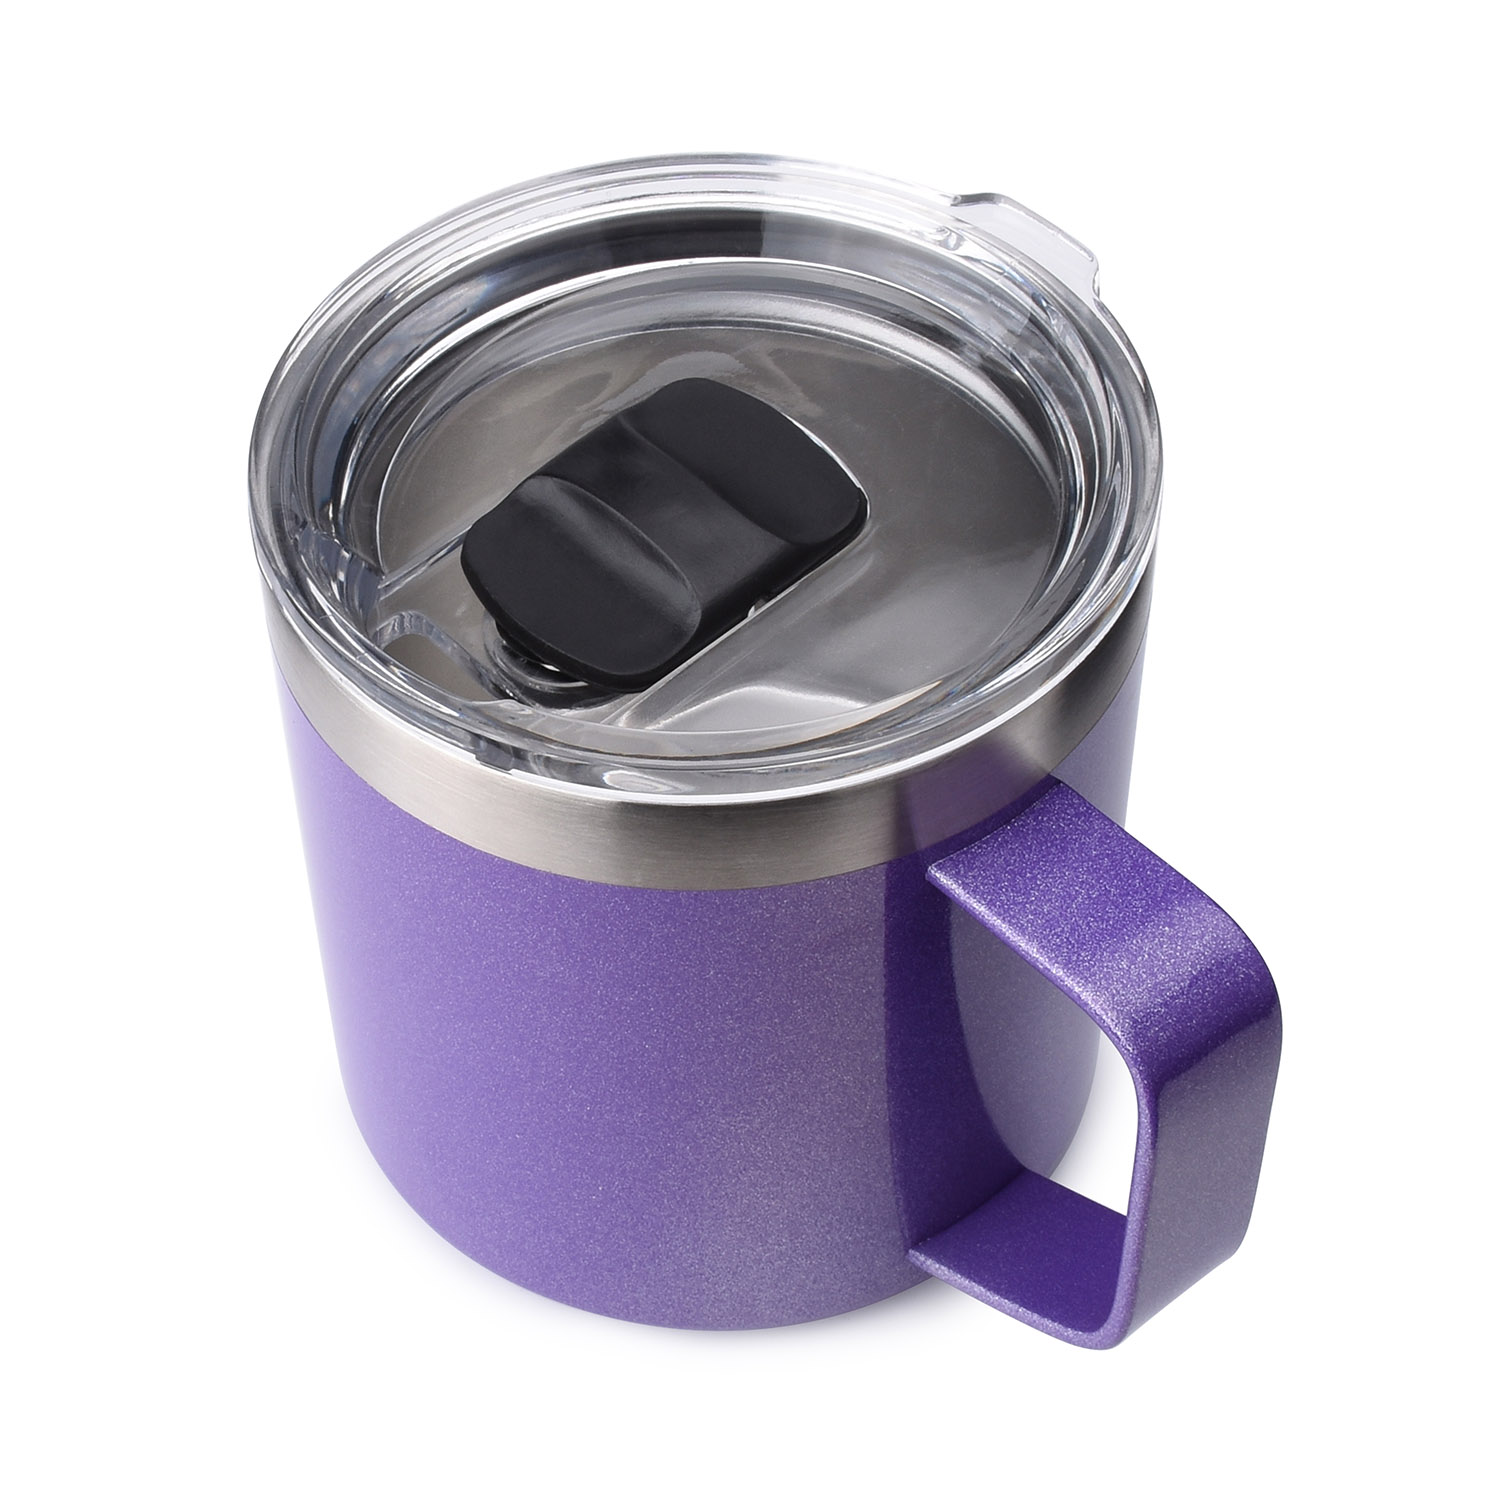 14 Oz. Stainless Steel Mug With Microban® Infused Lid*